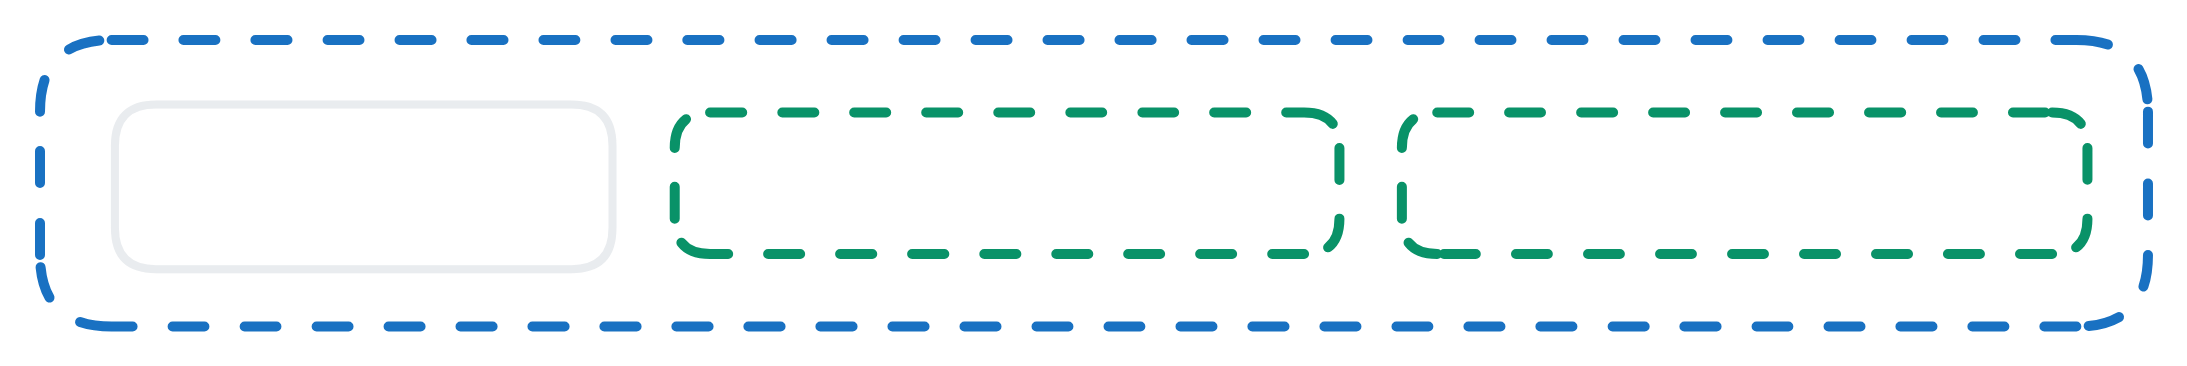 Image showing end justify horizontal